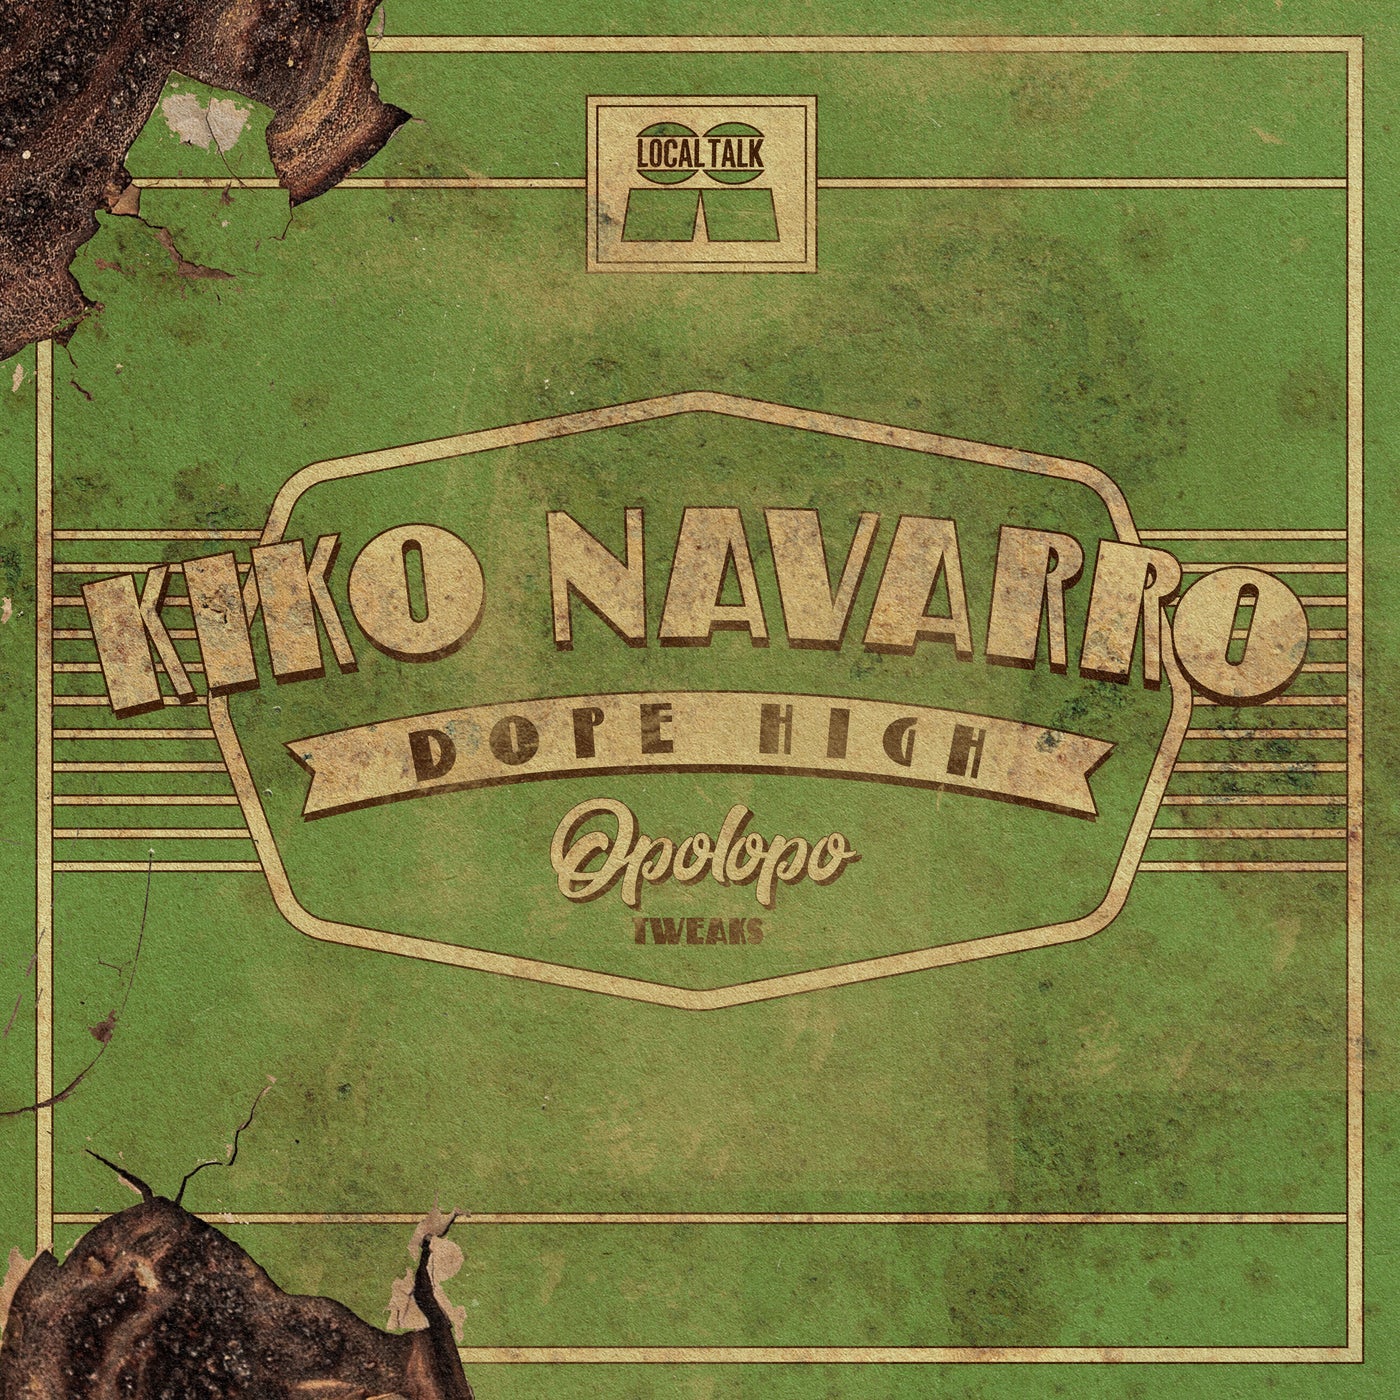 image cover: Kiko Navarro - Dope High (OPOLOPO Tweak) / OTW3